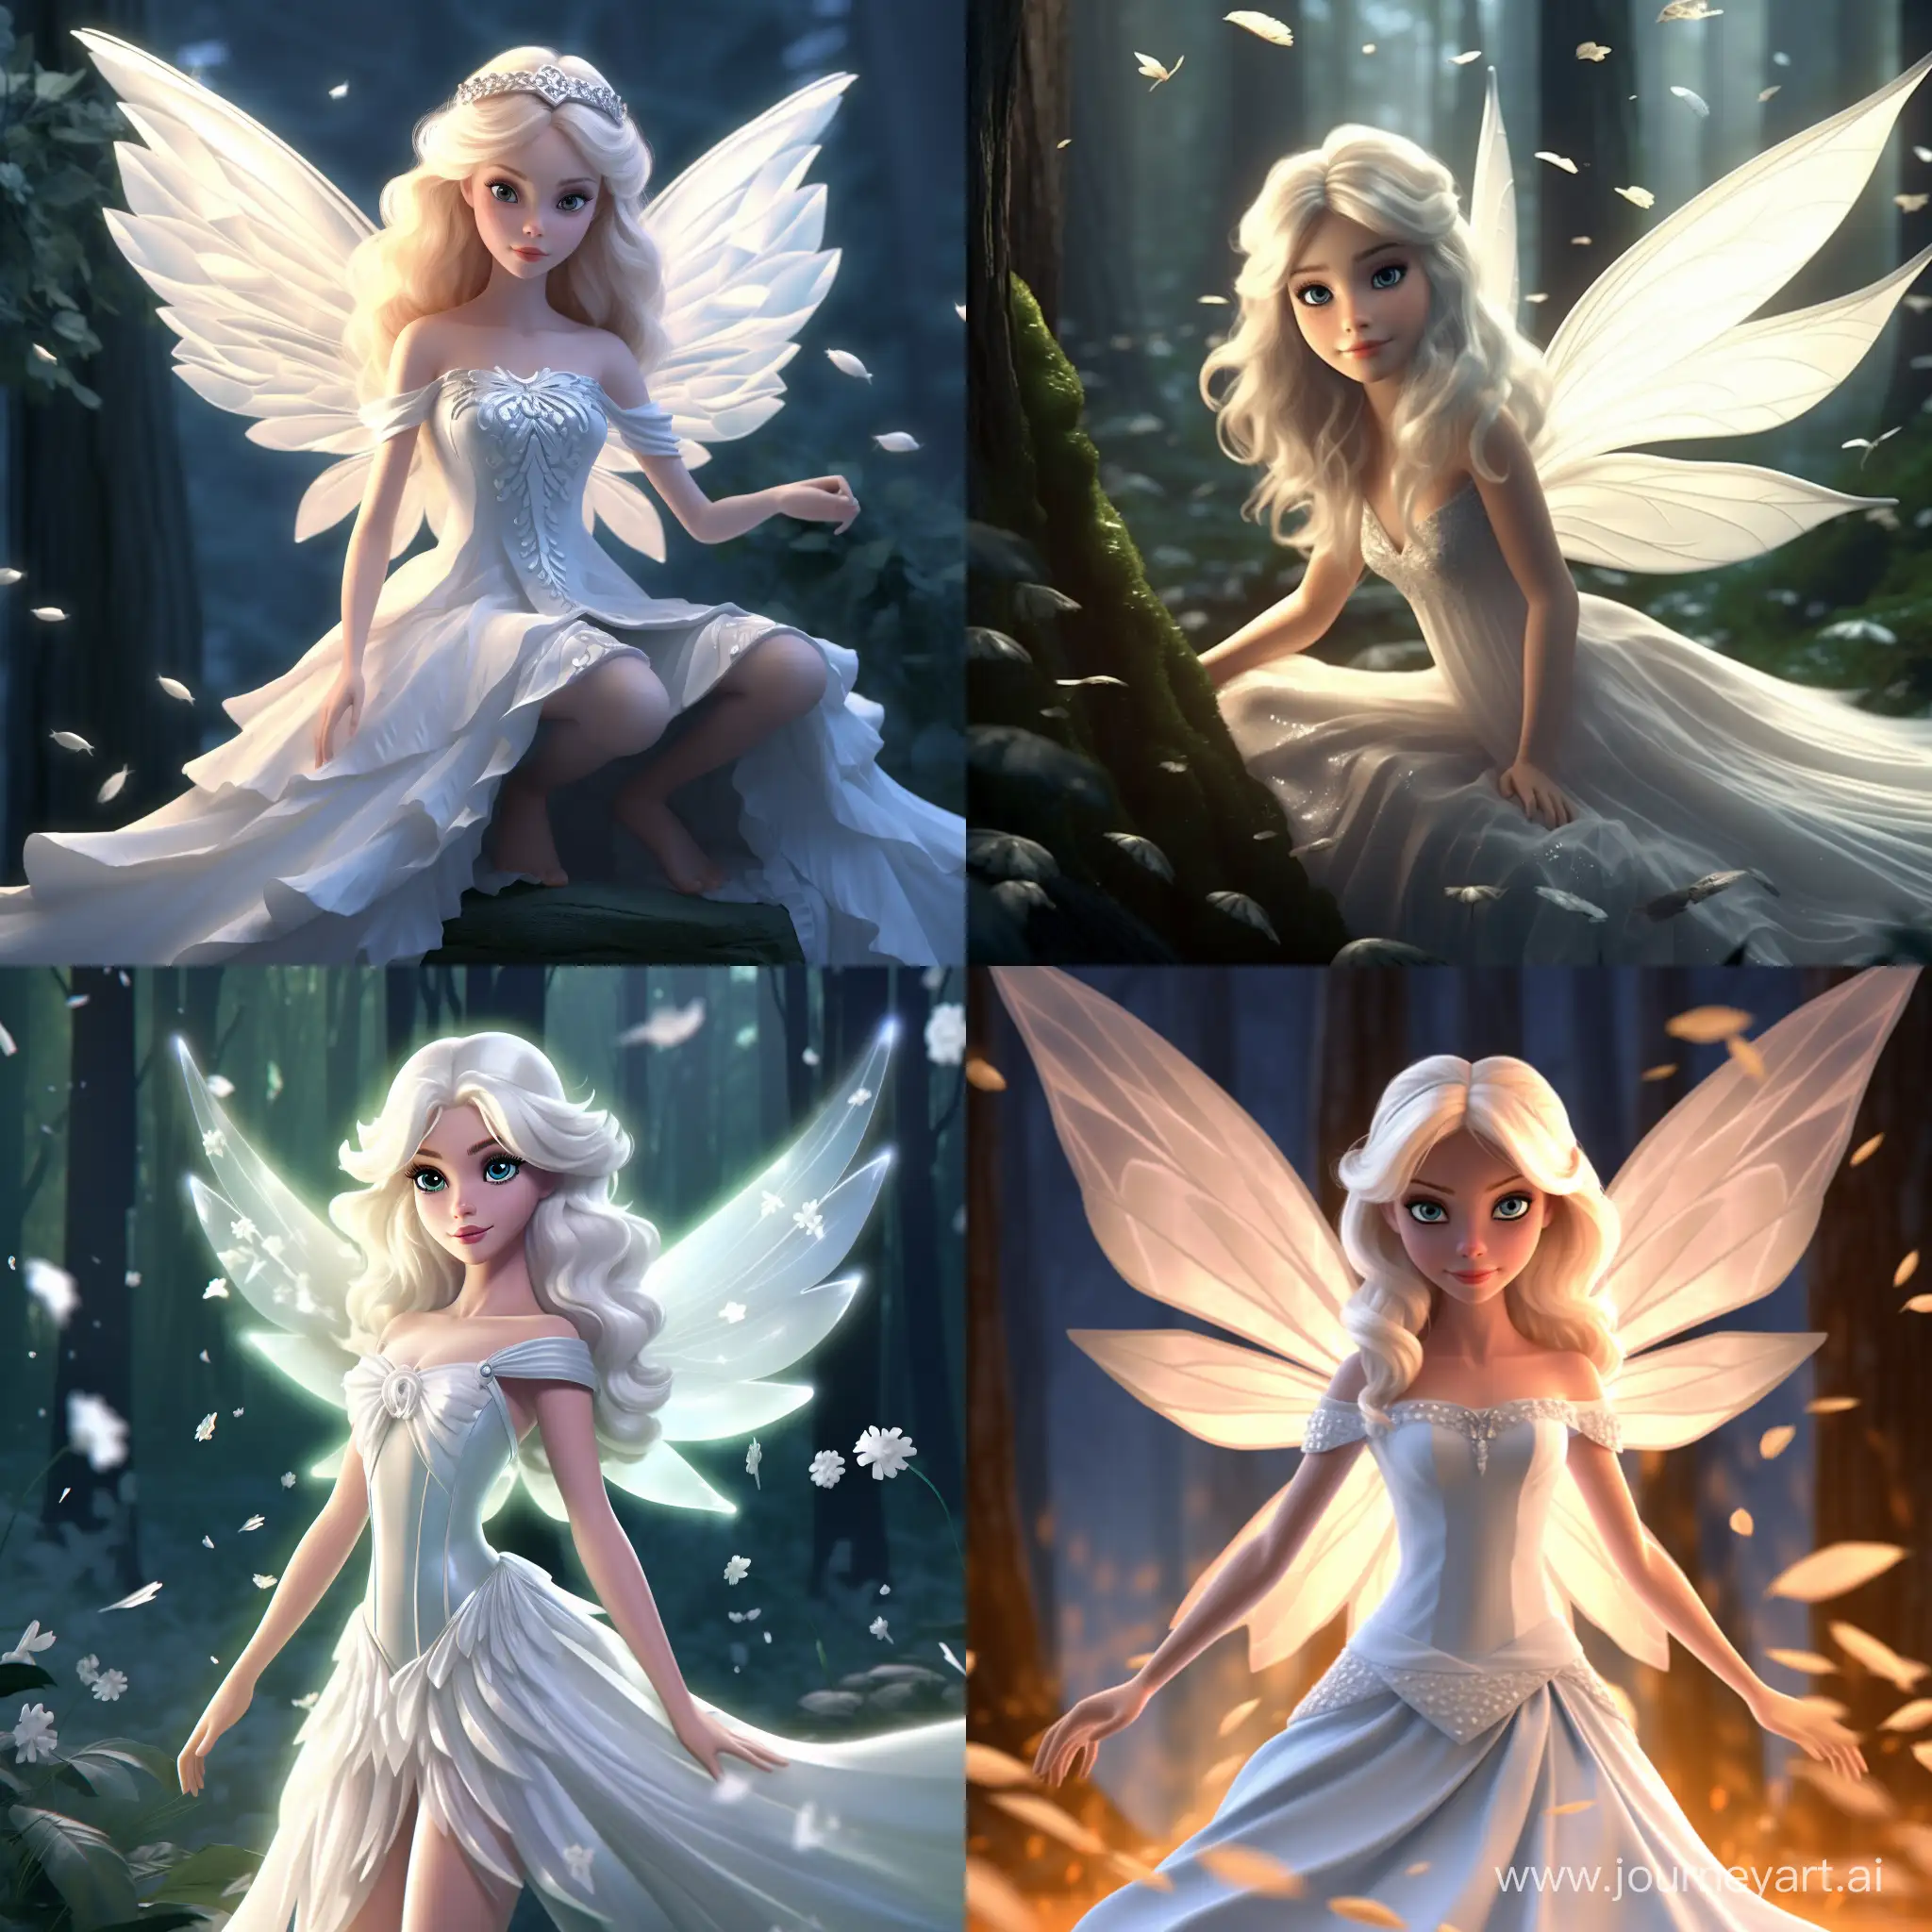 Enchanting-White-Fairy-in-Disney-Animation-Style